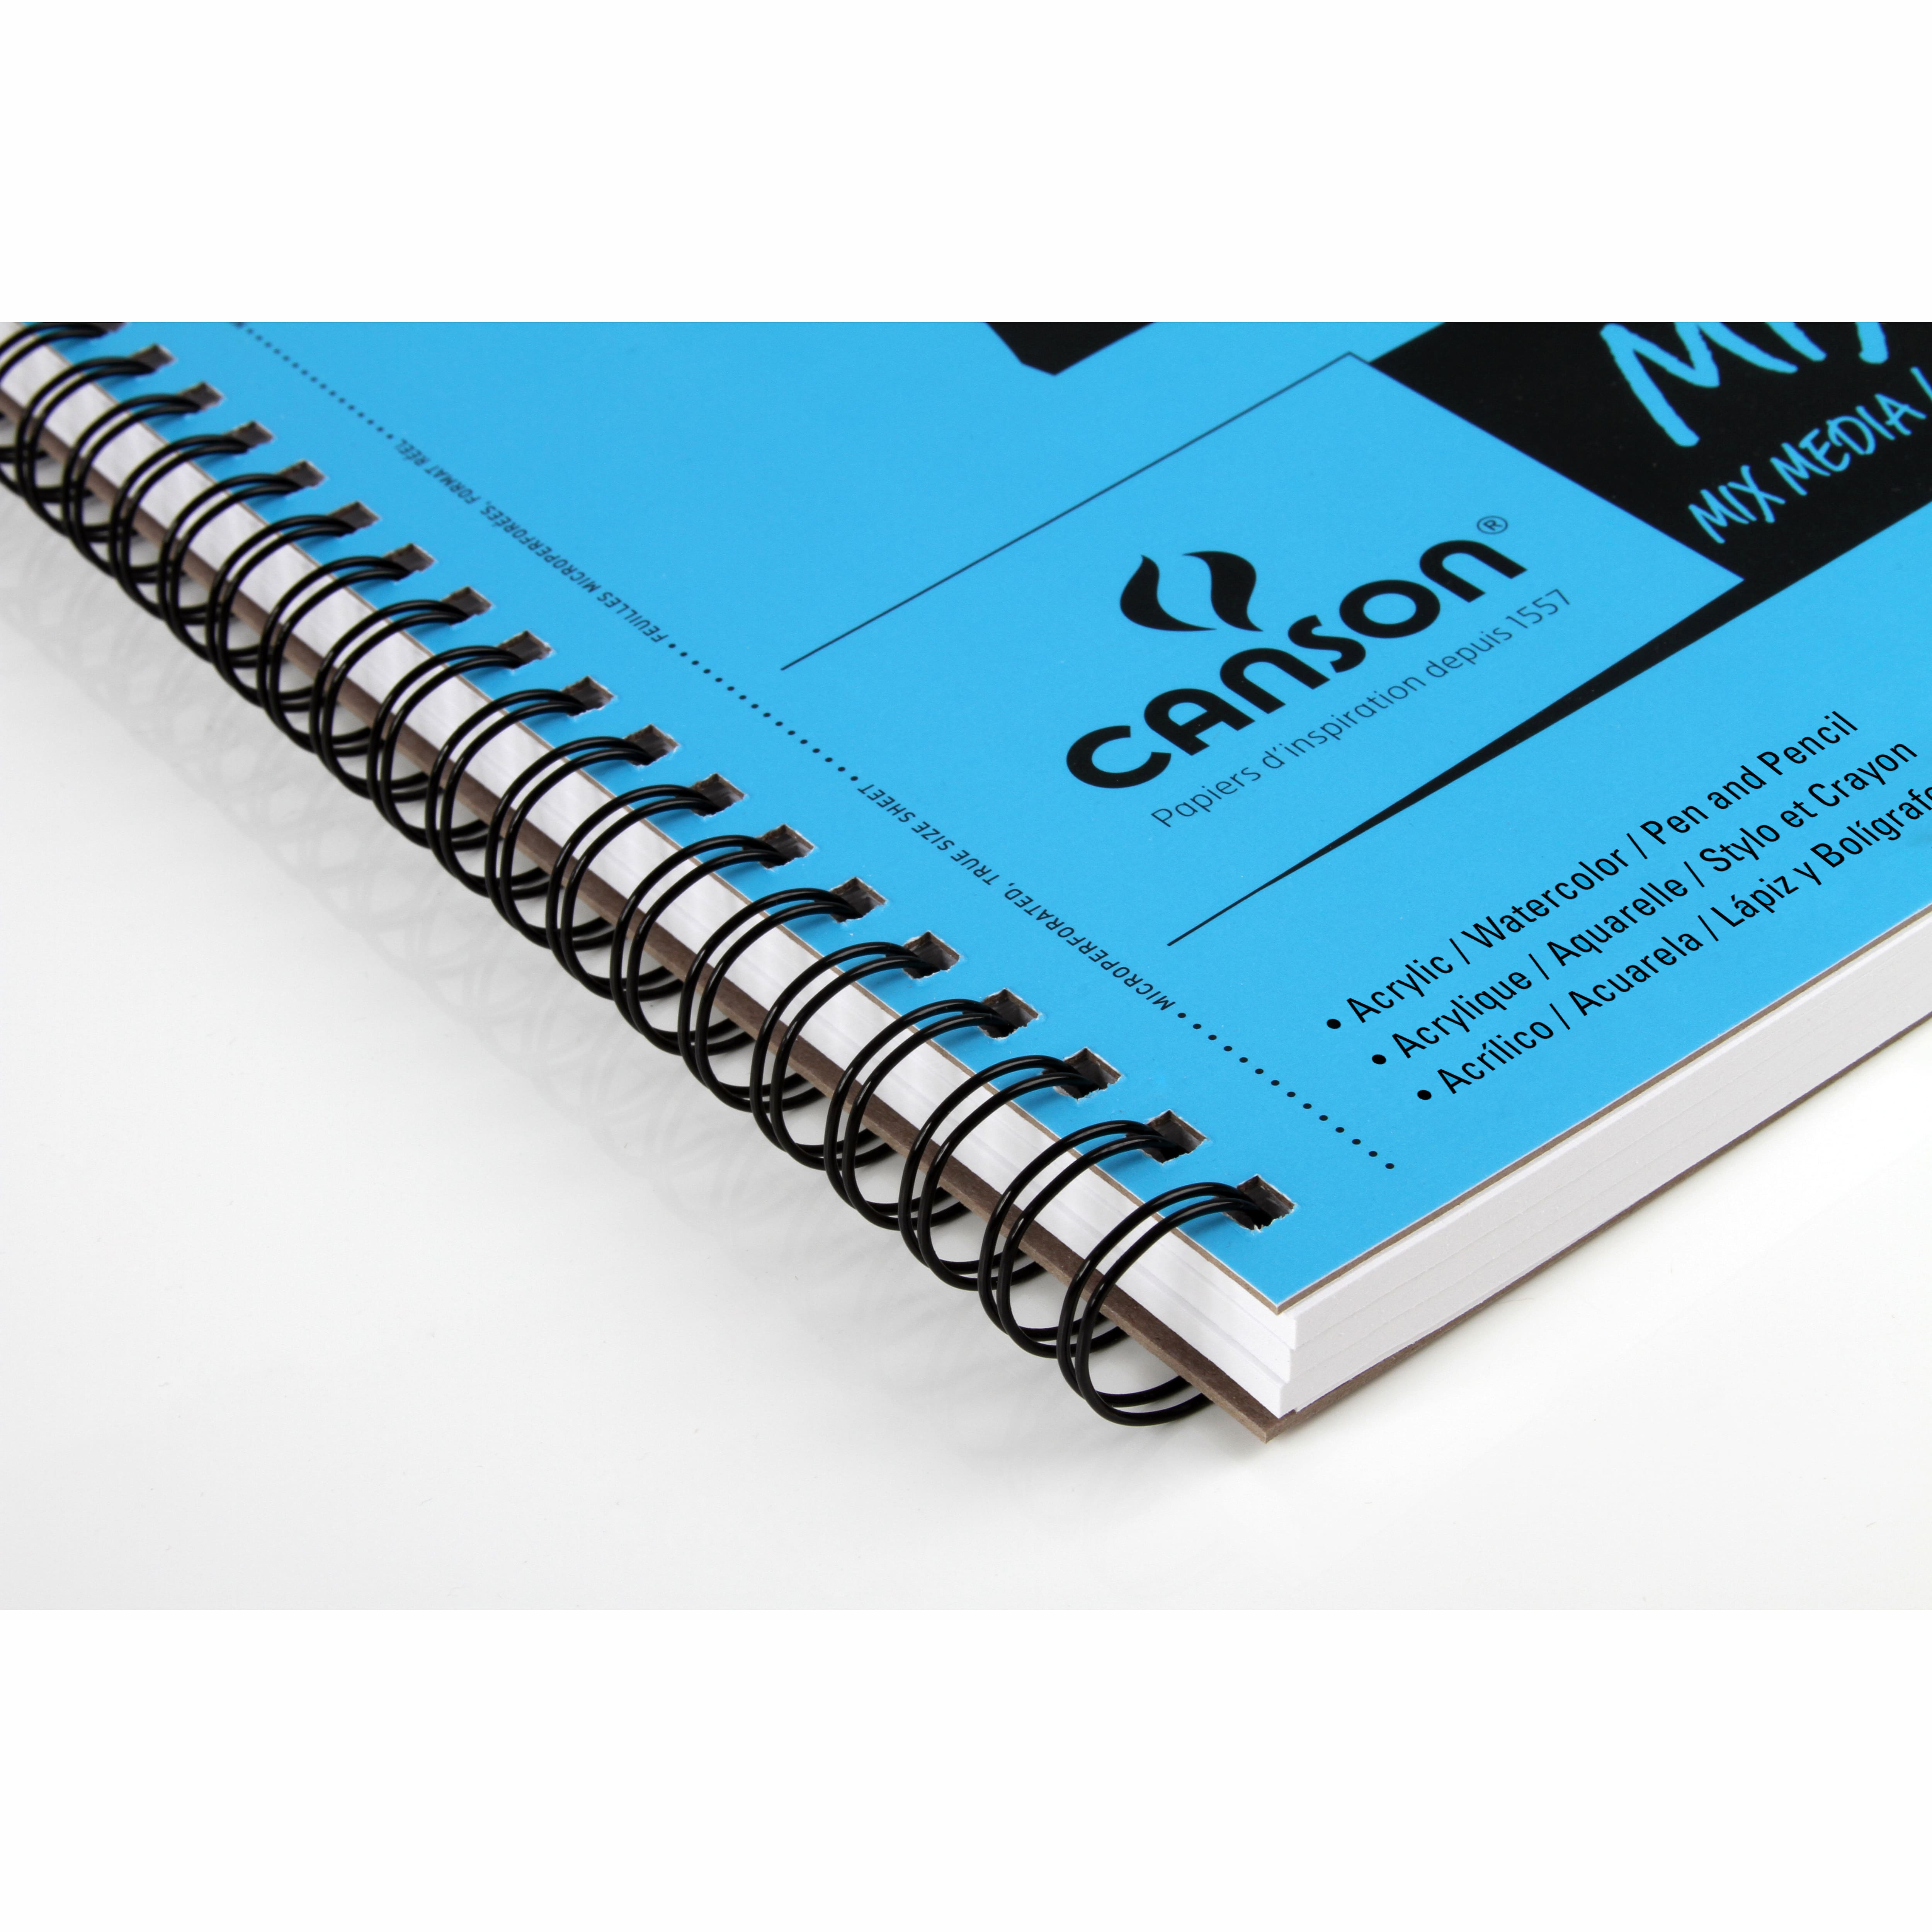 Canson sketch pad XL Mix Media 30 sheets A4 300g/m² spiral binding